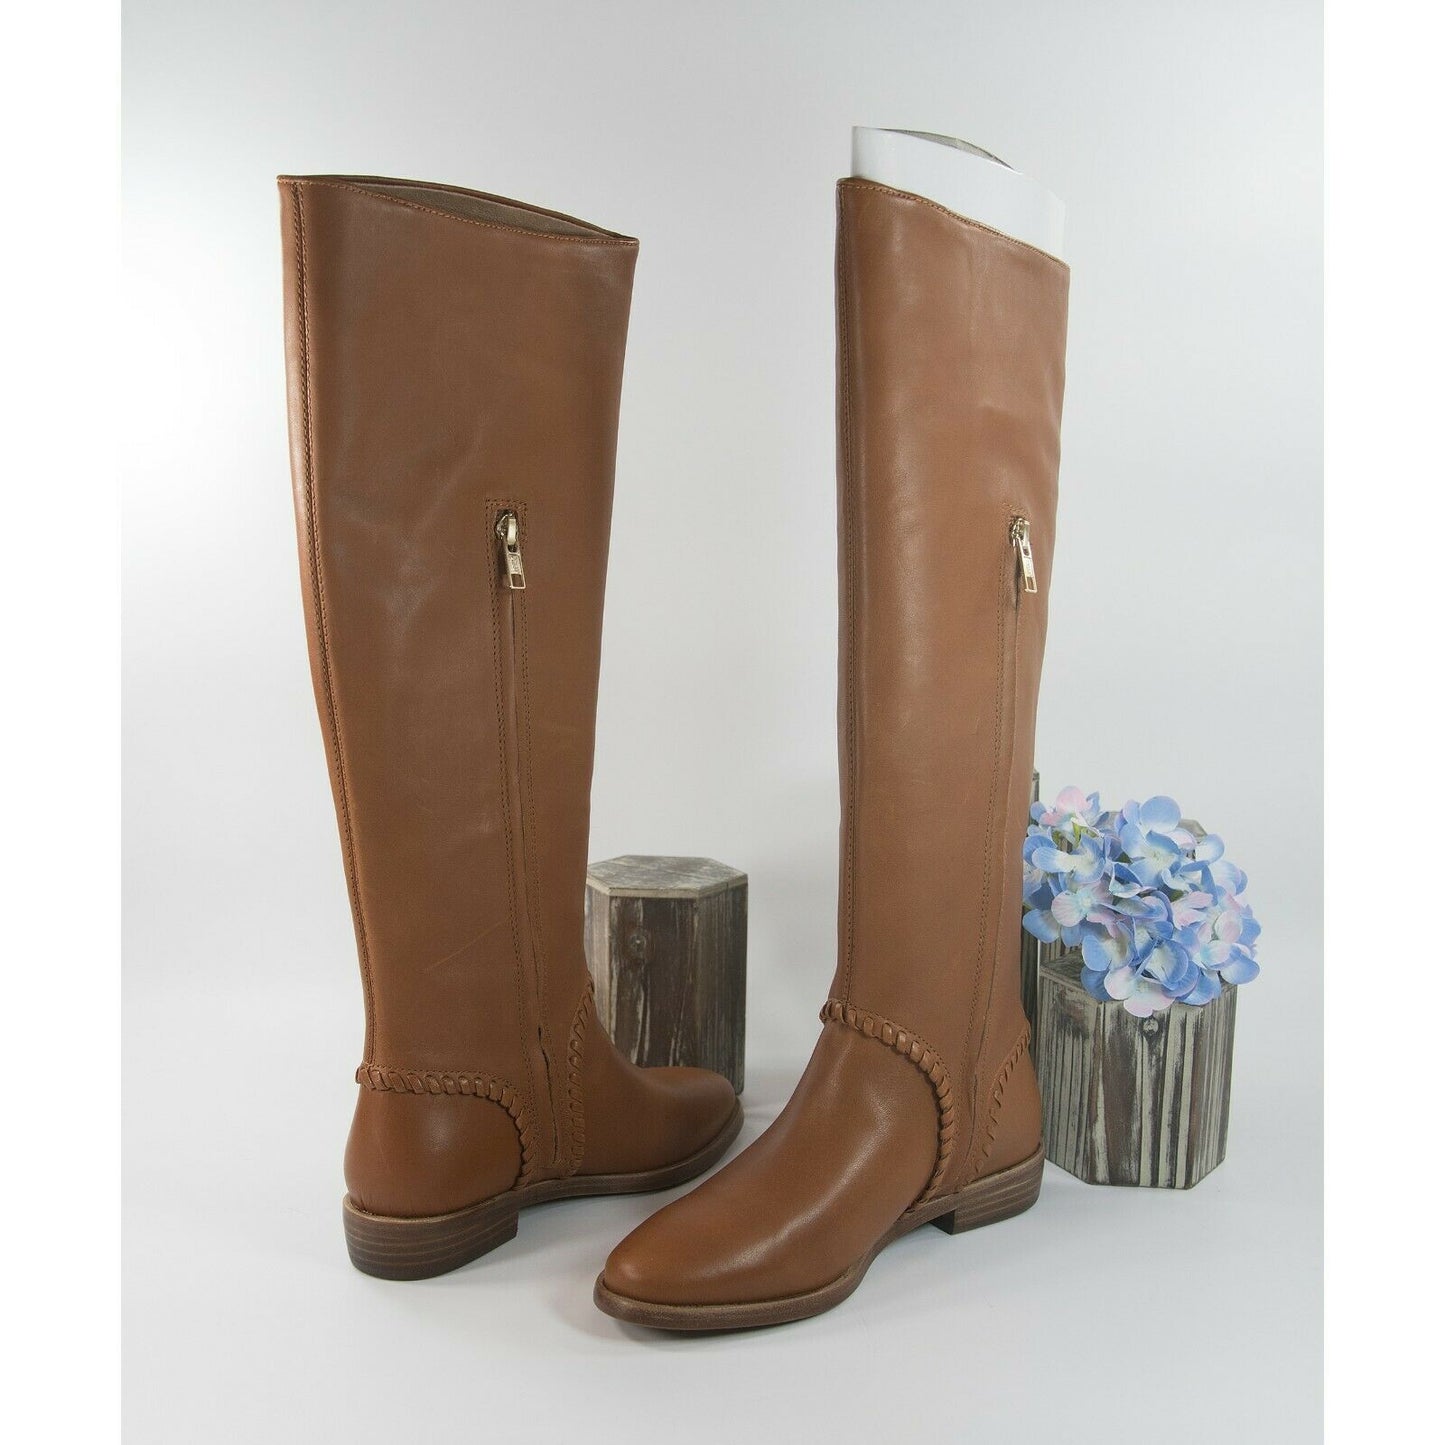 UGG Caramel Leather Gracen Whipstitch Tall Boots Size 6 NIB